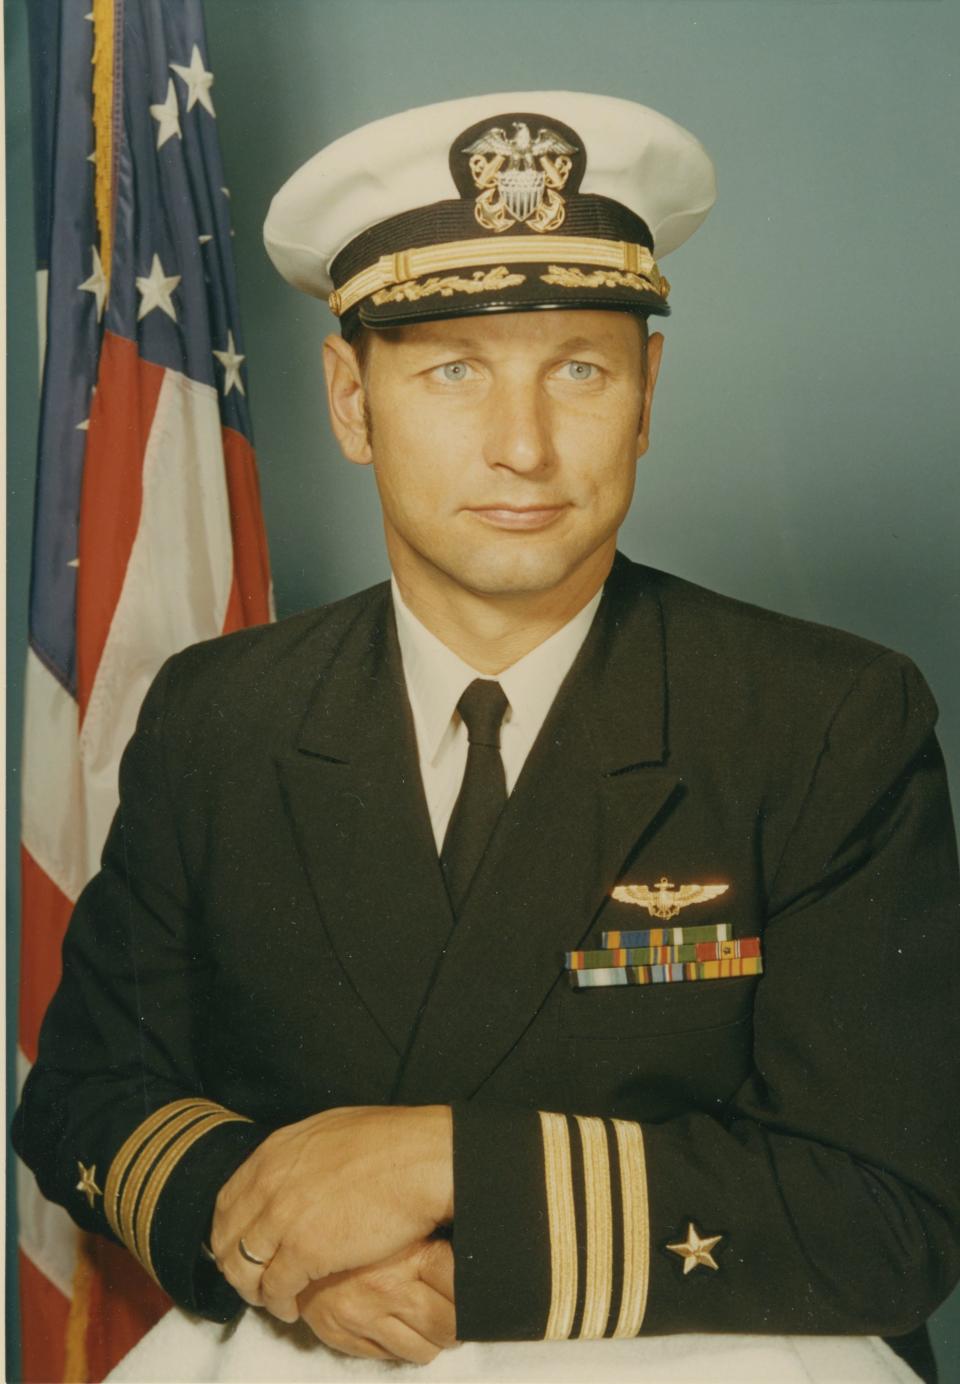 Portrait of John Dana as a lieutenant commander, circa 1970.